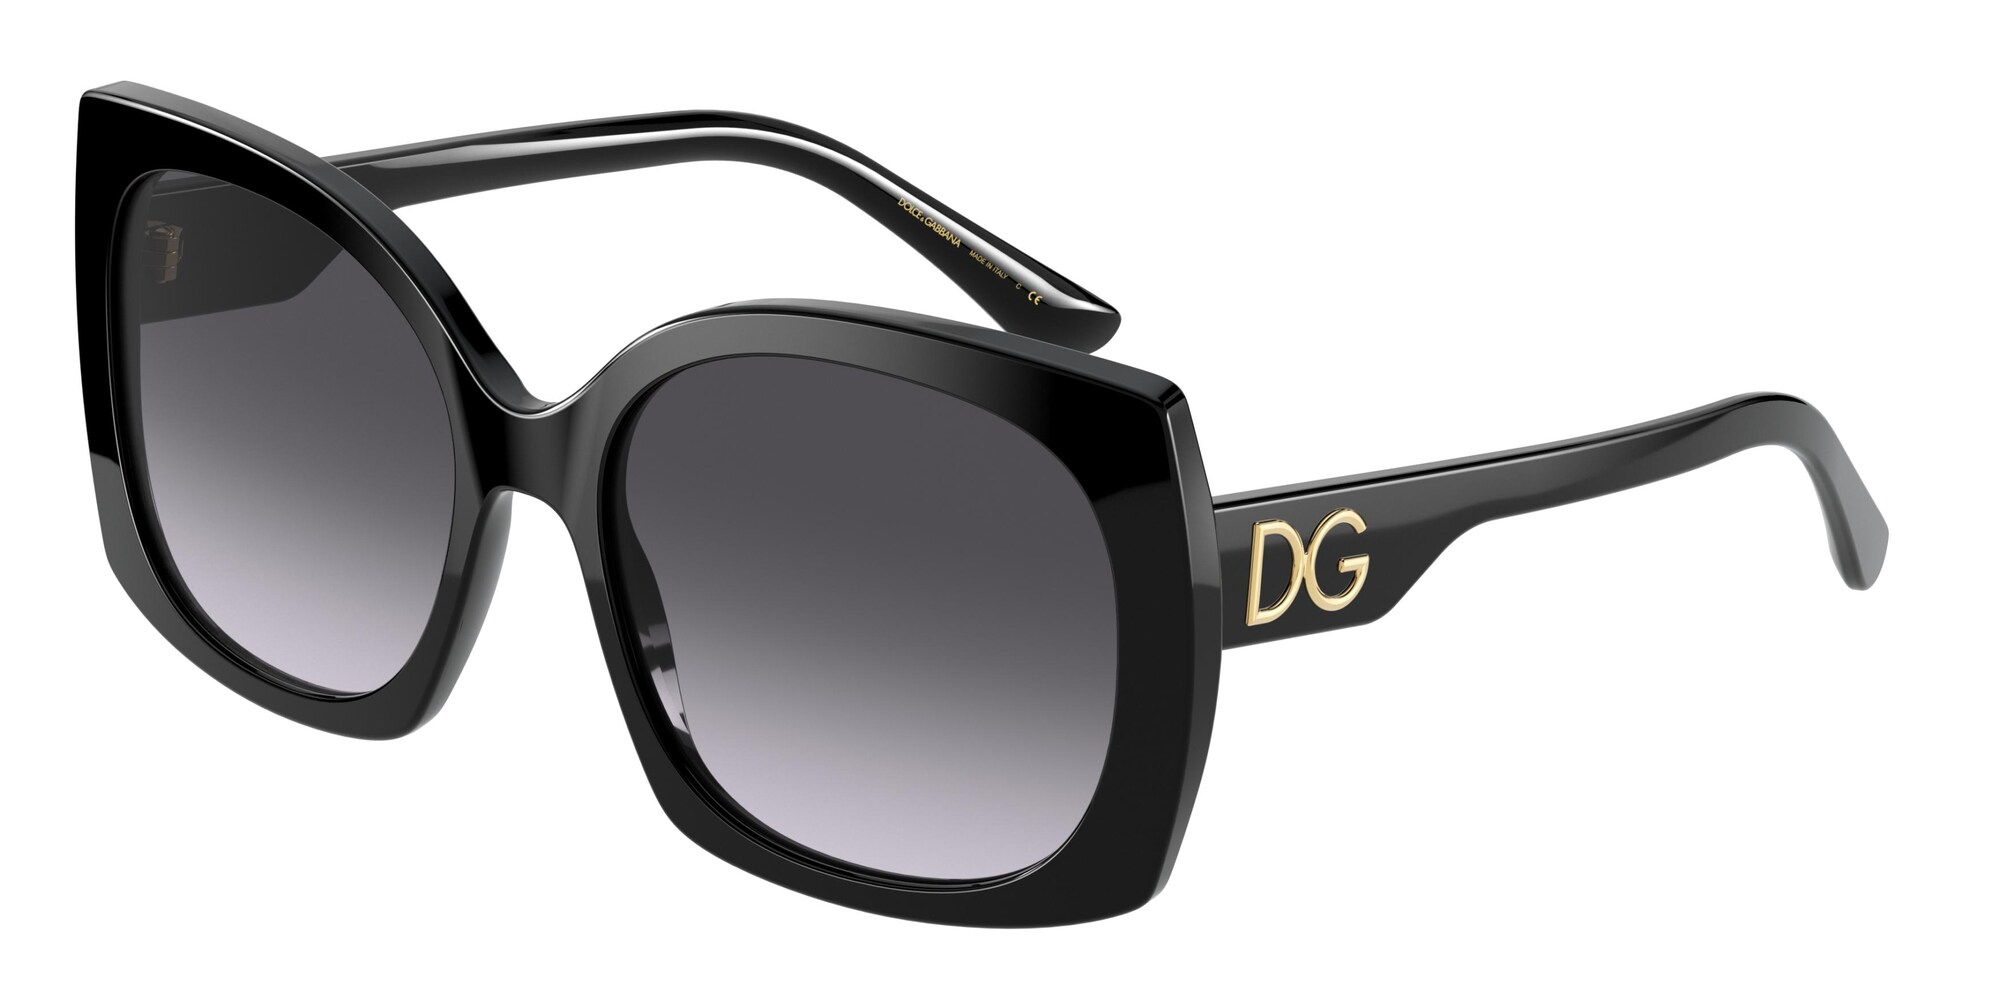 Dolce&Gabbana DG4385 501/8G